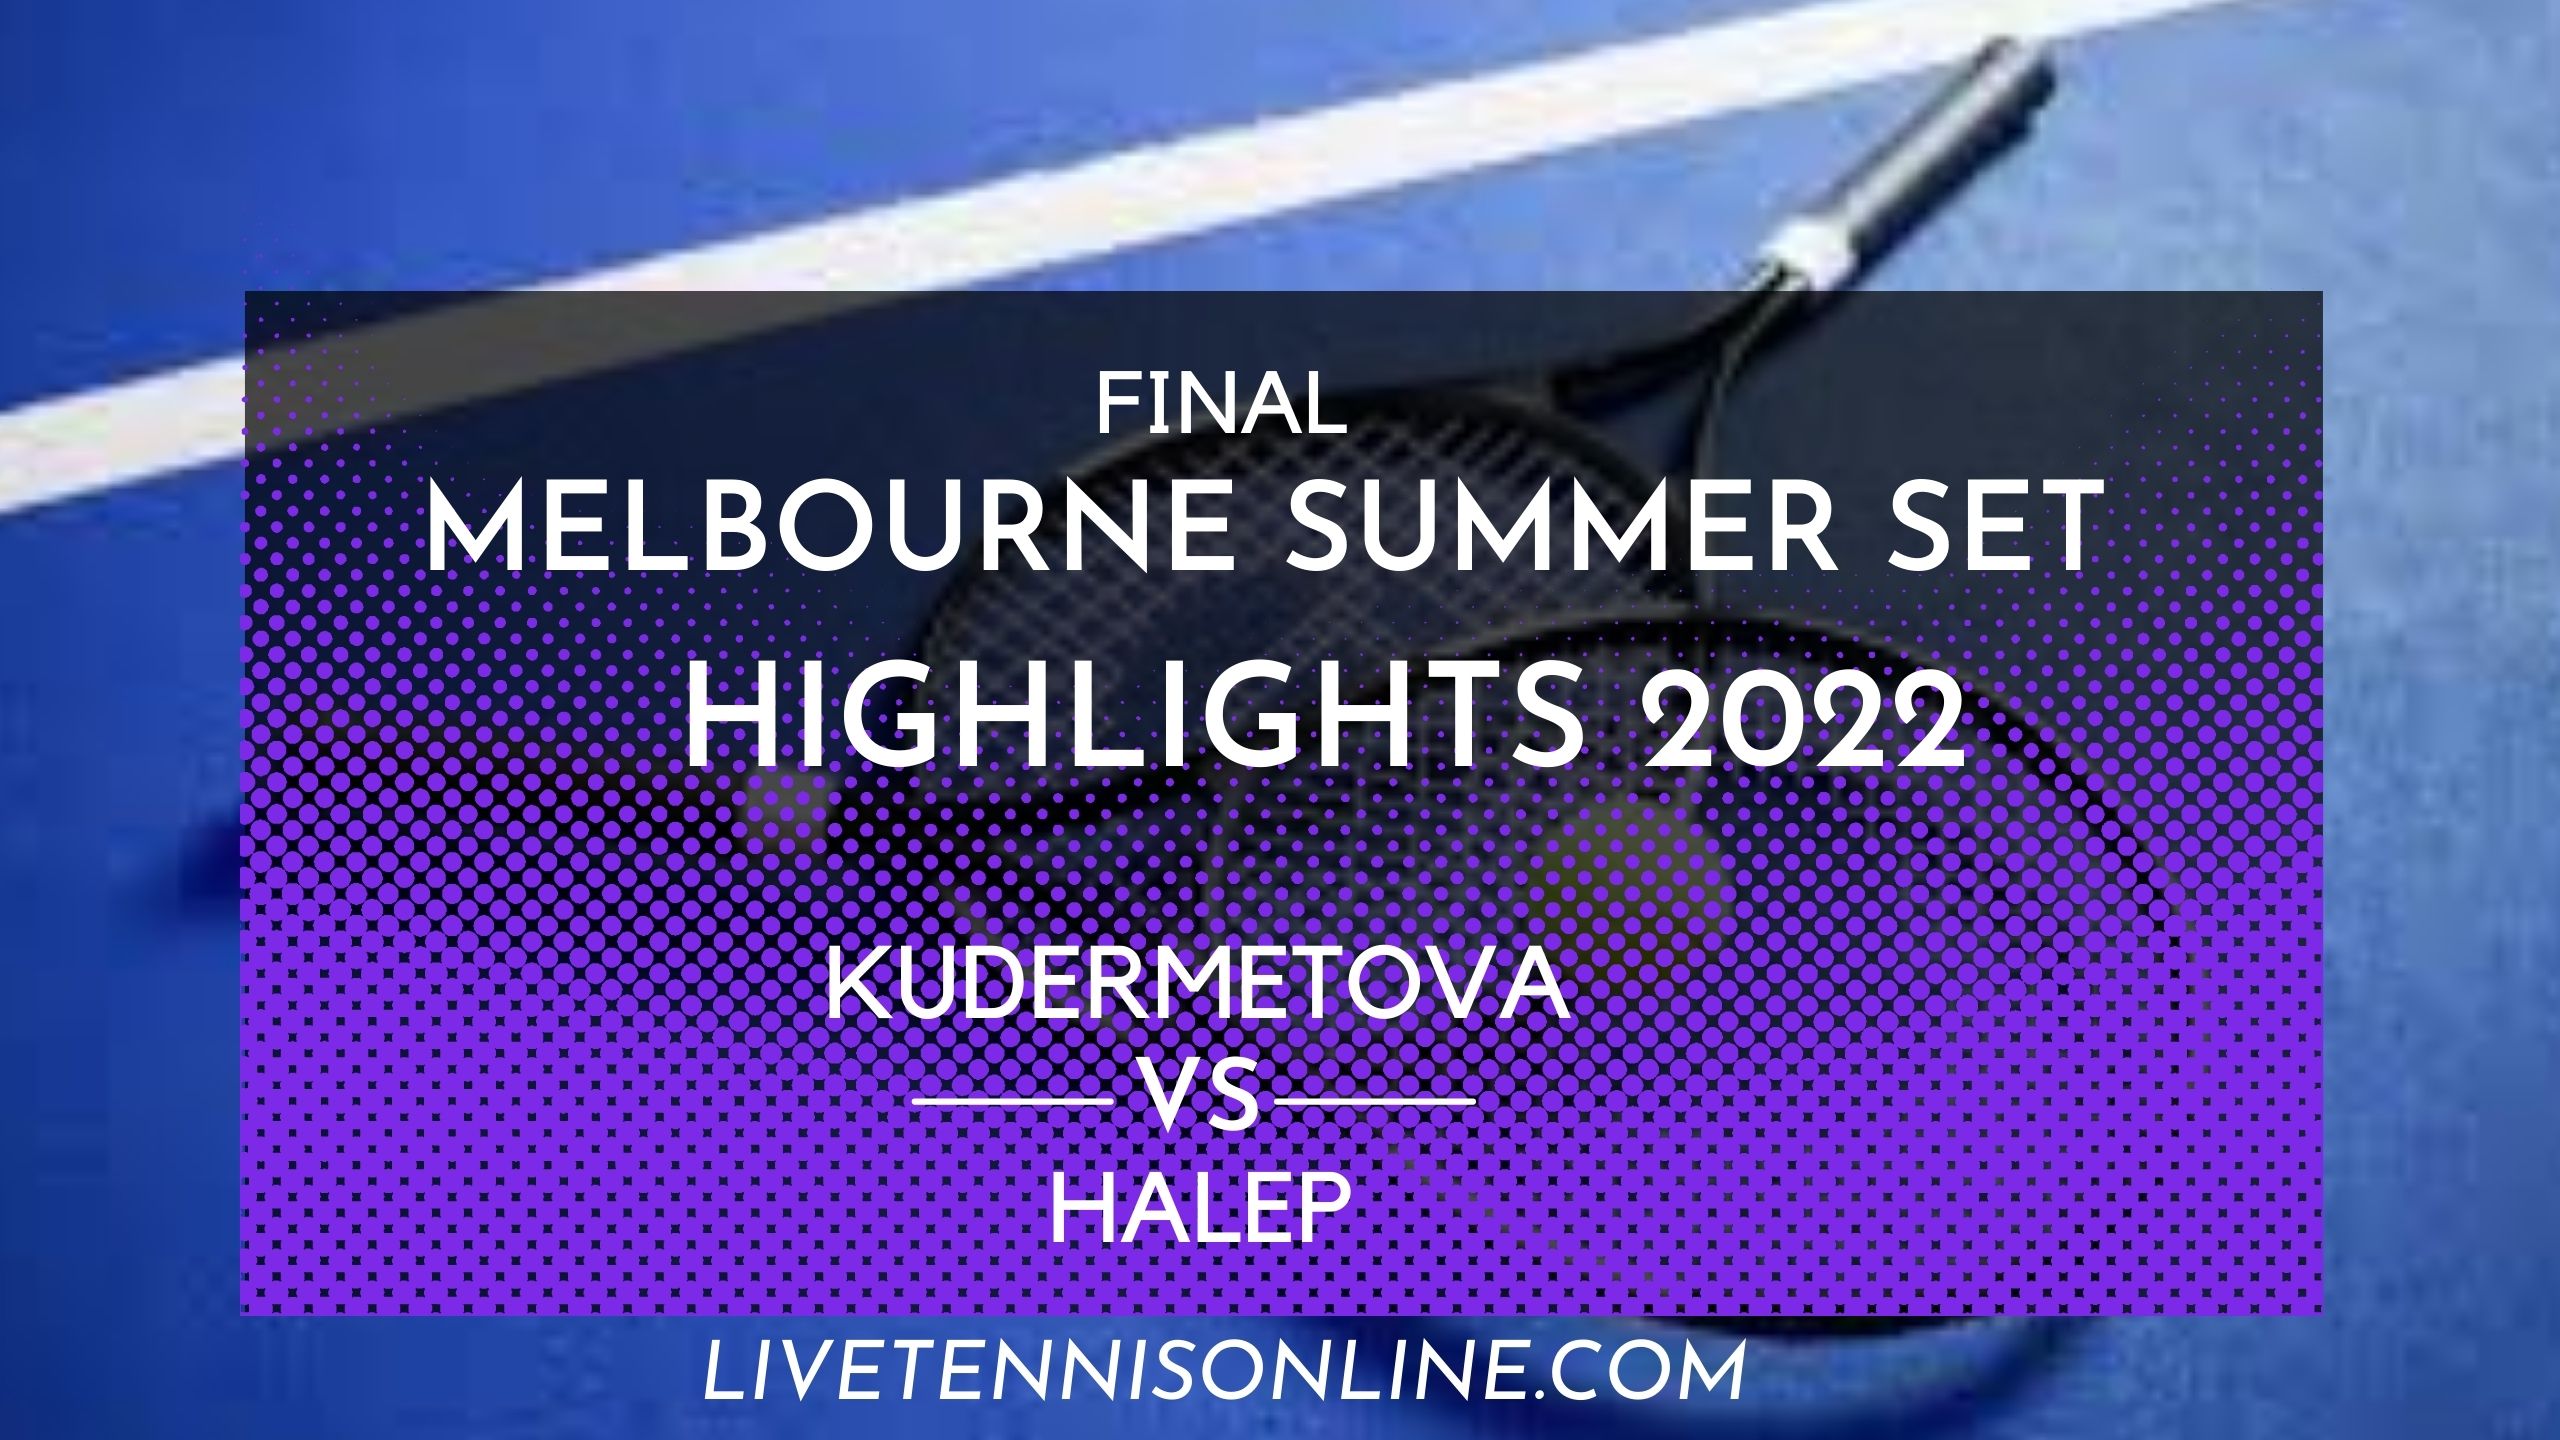 Kudermetova Vs Halep Final Highlights 2022 WTA Melbourne